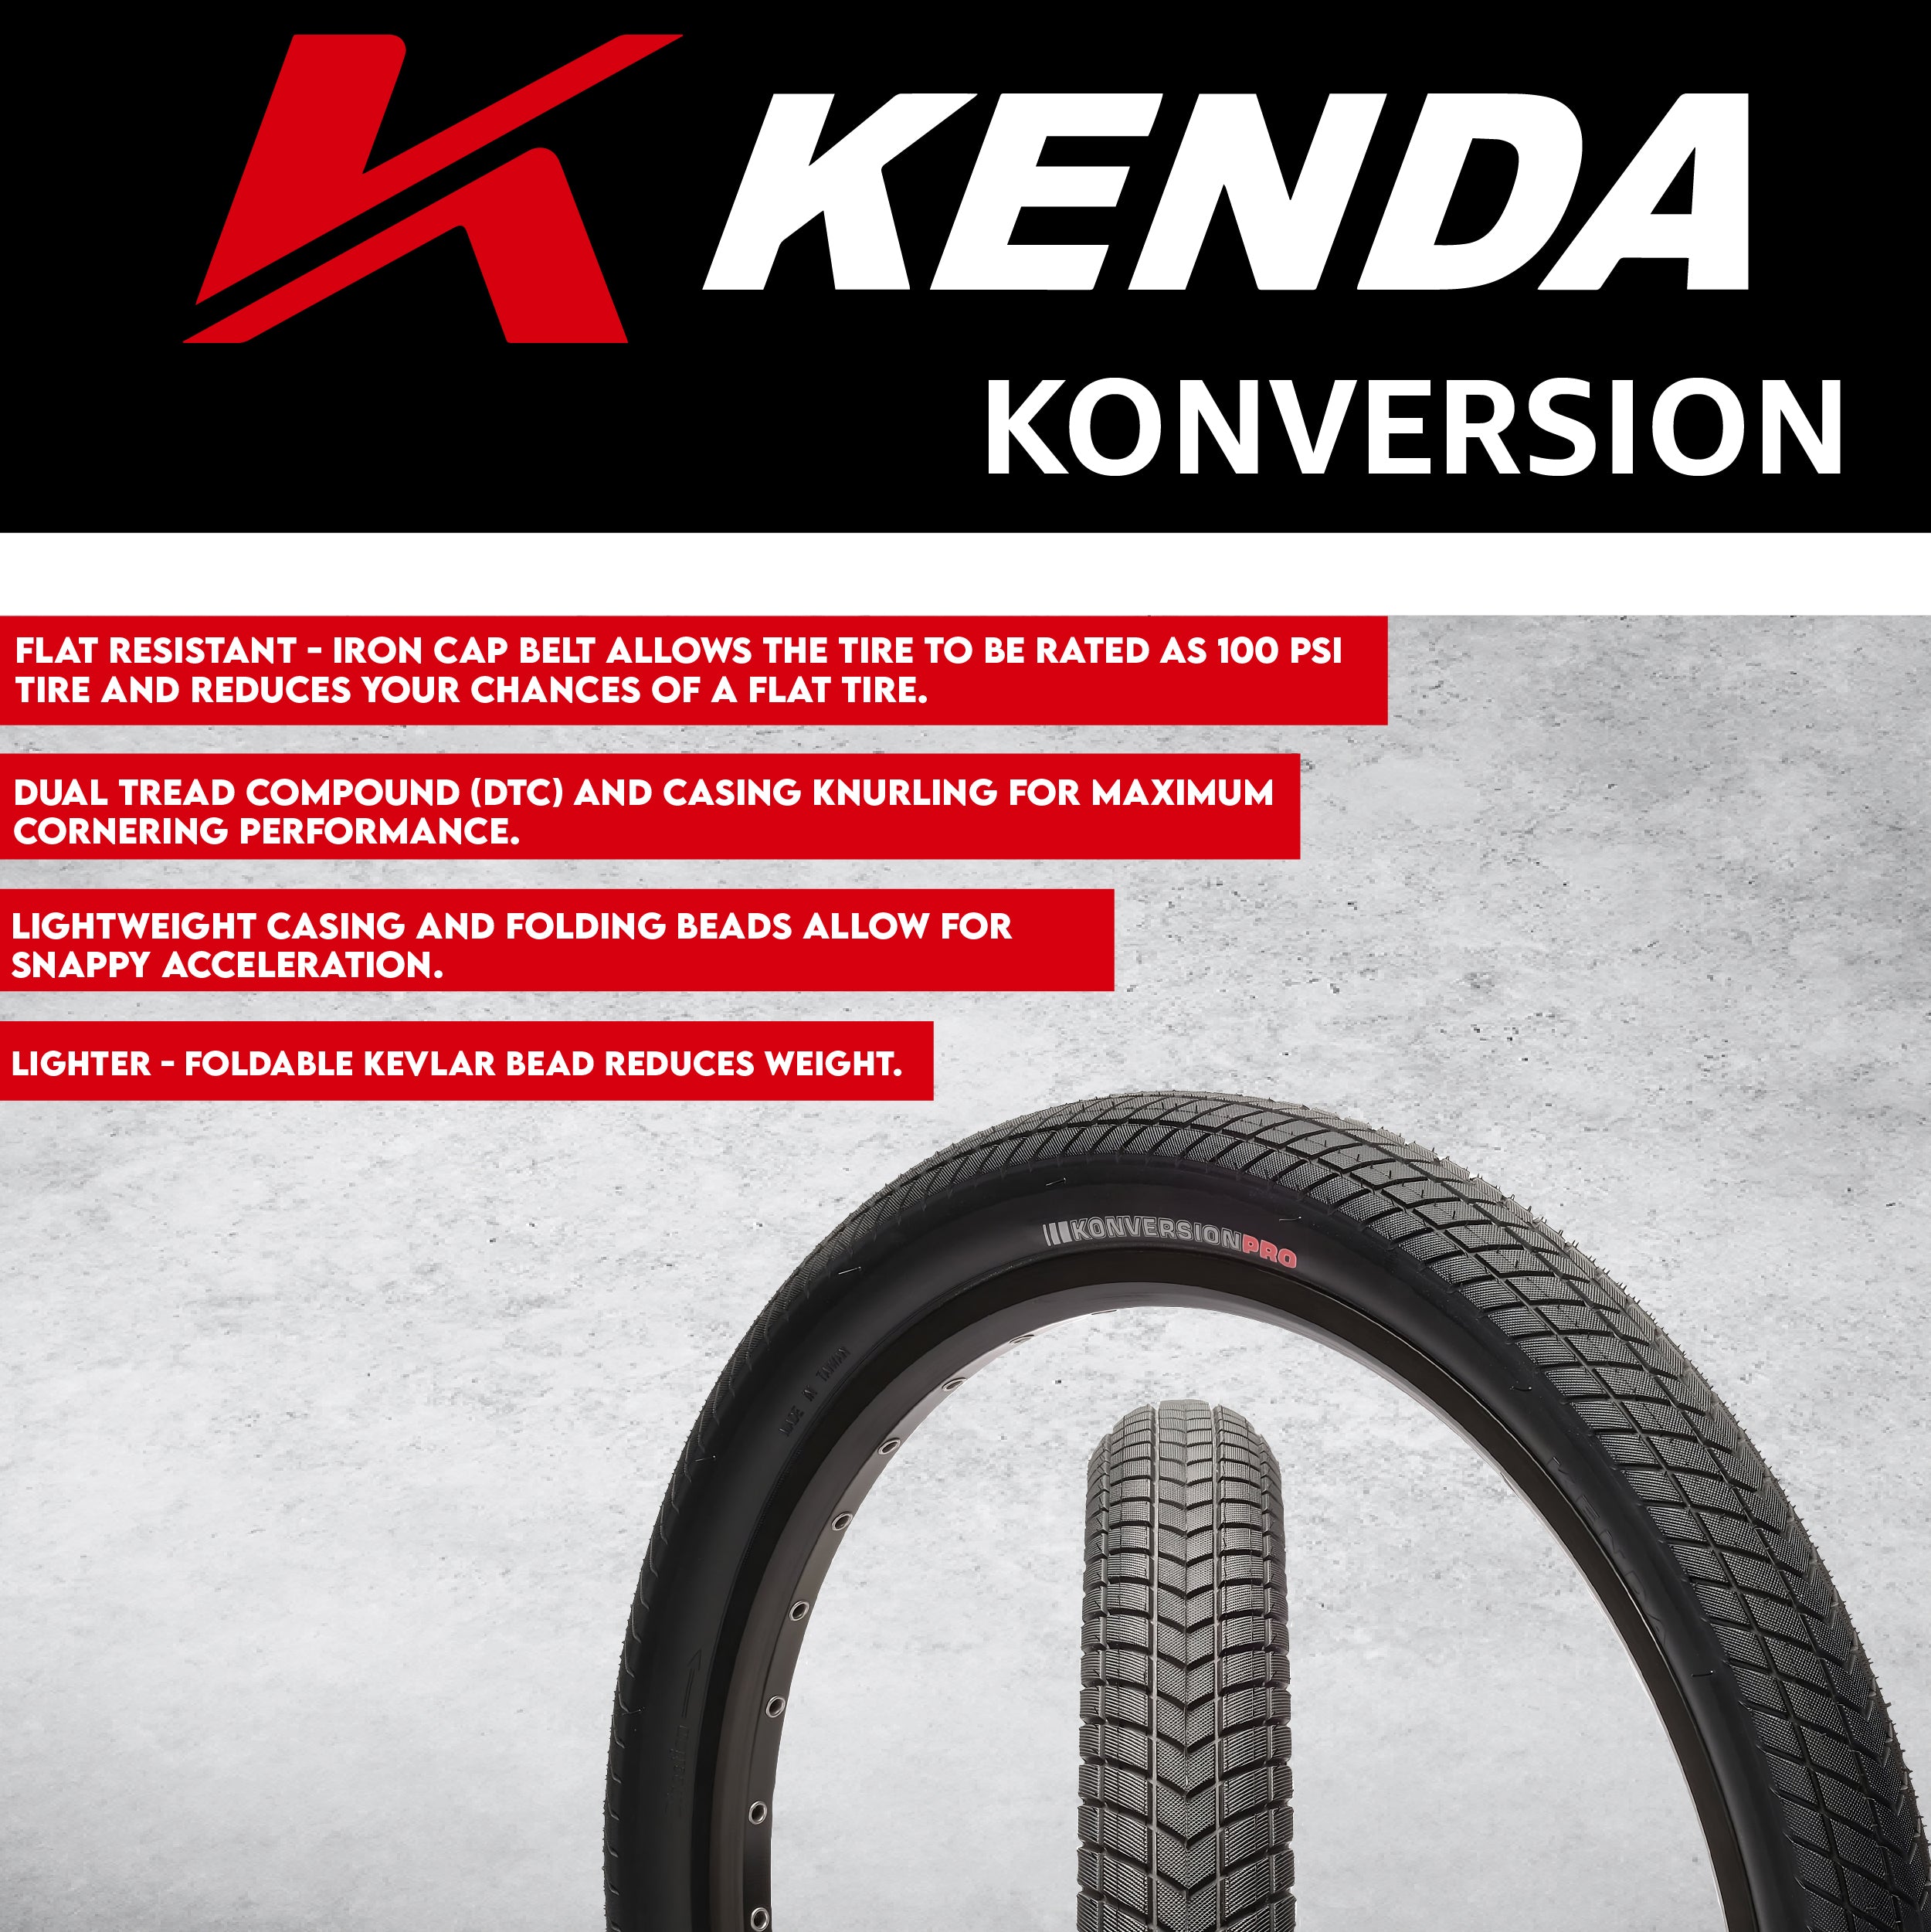 Kenda Konversion Pro 120tpi Fold 20x1.75 BMX Bicycle Tire w/ Bottle Opener